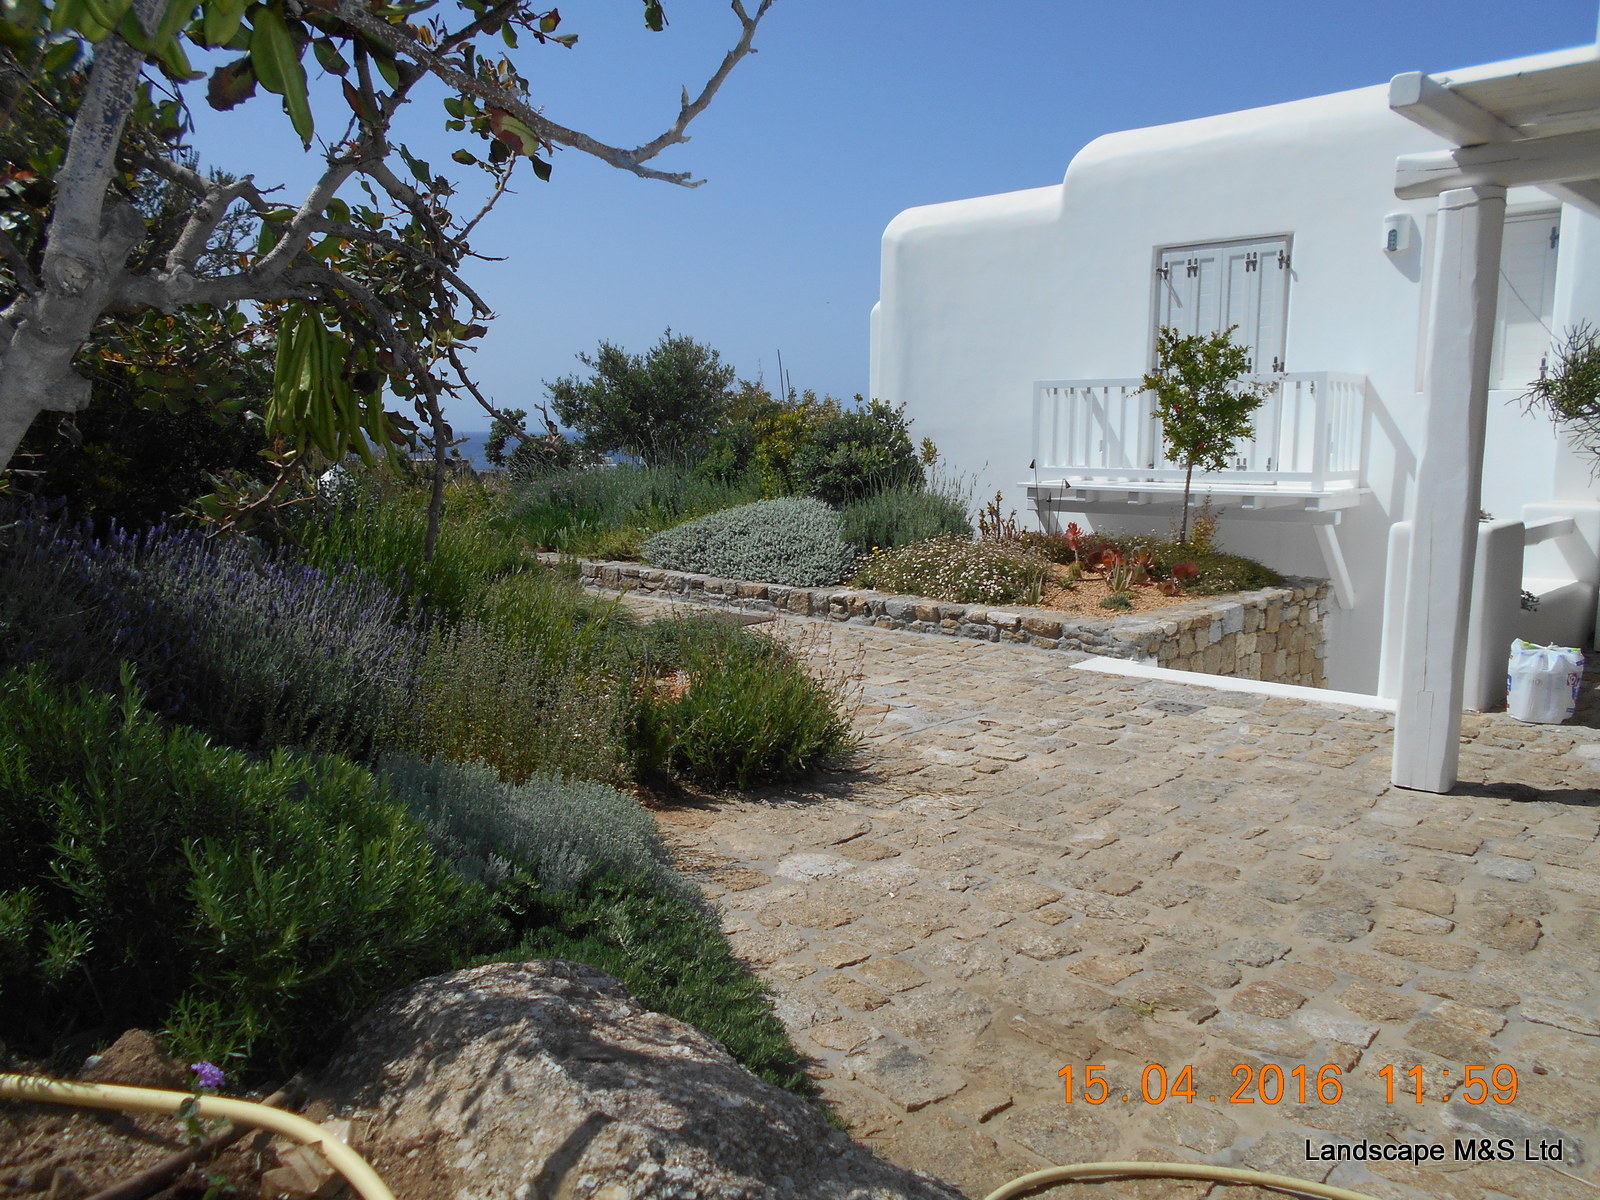 Private villa in Mykonos Location Mykonos Greece Date ...